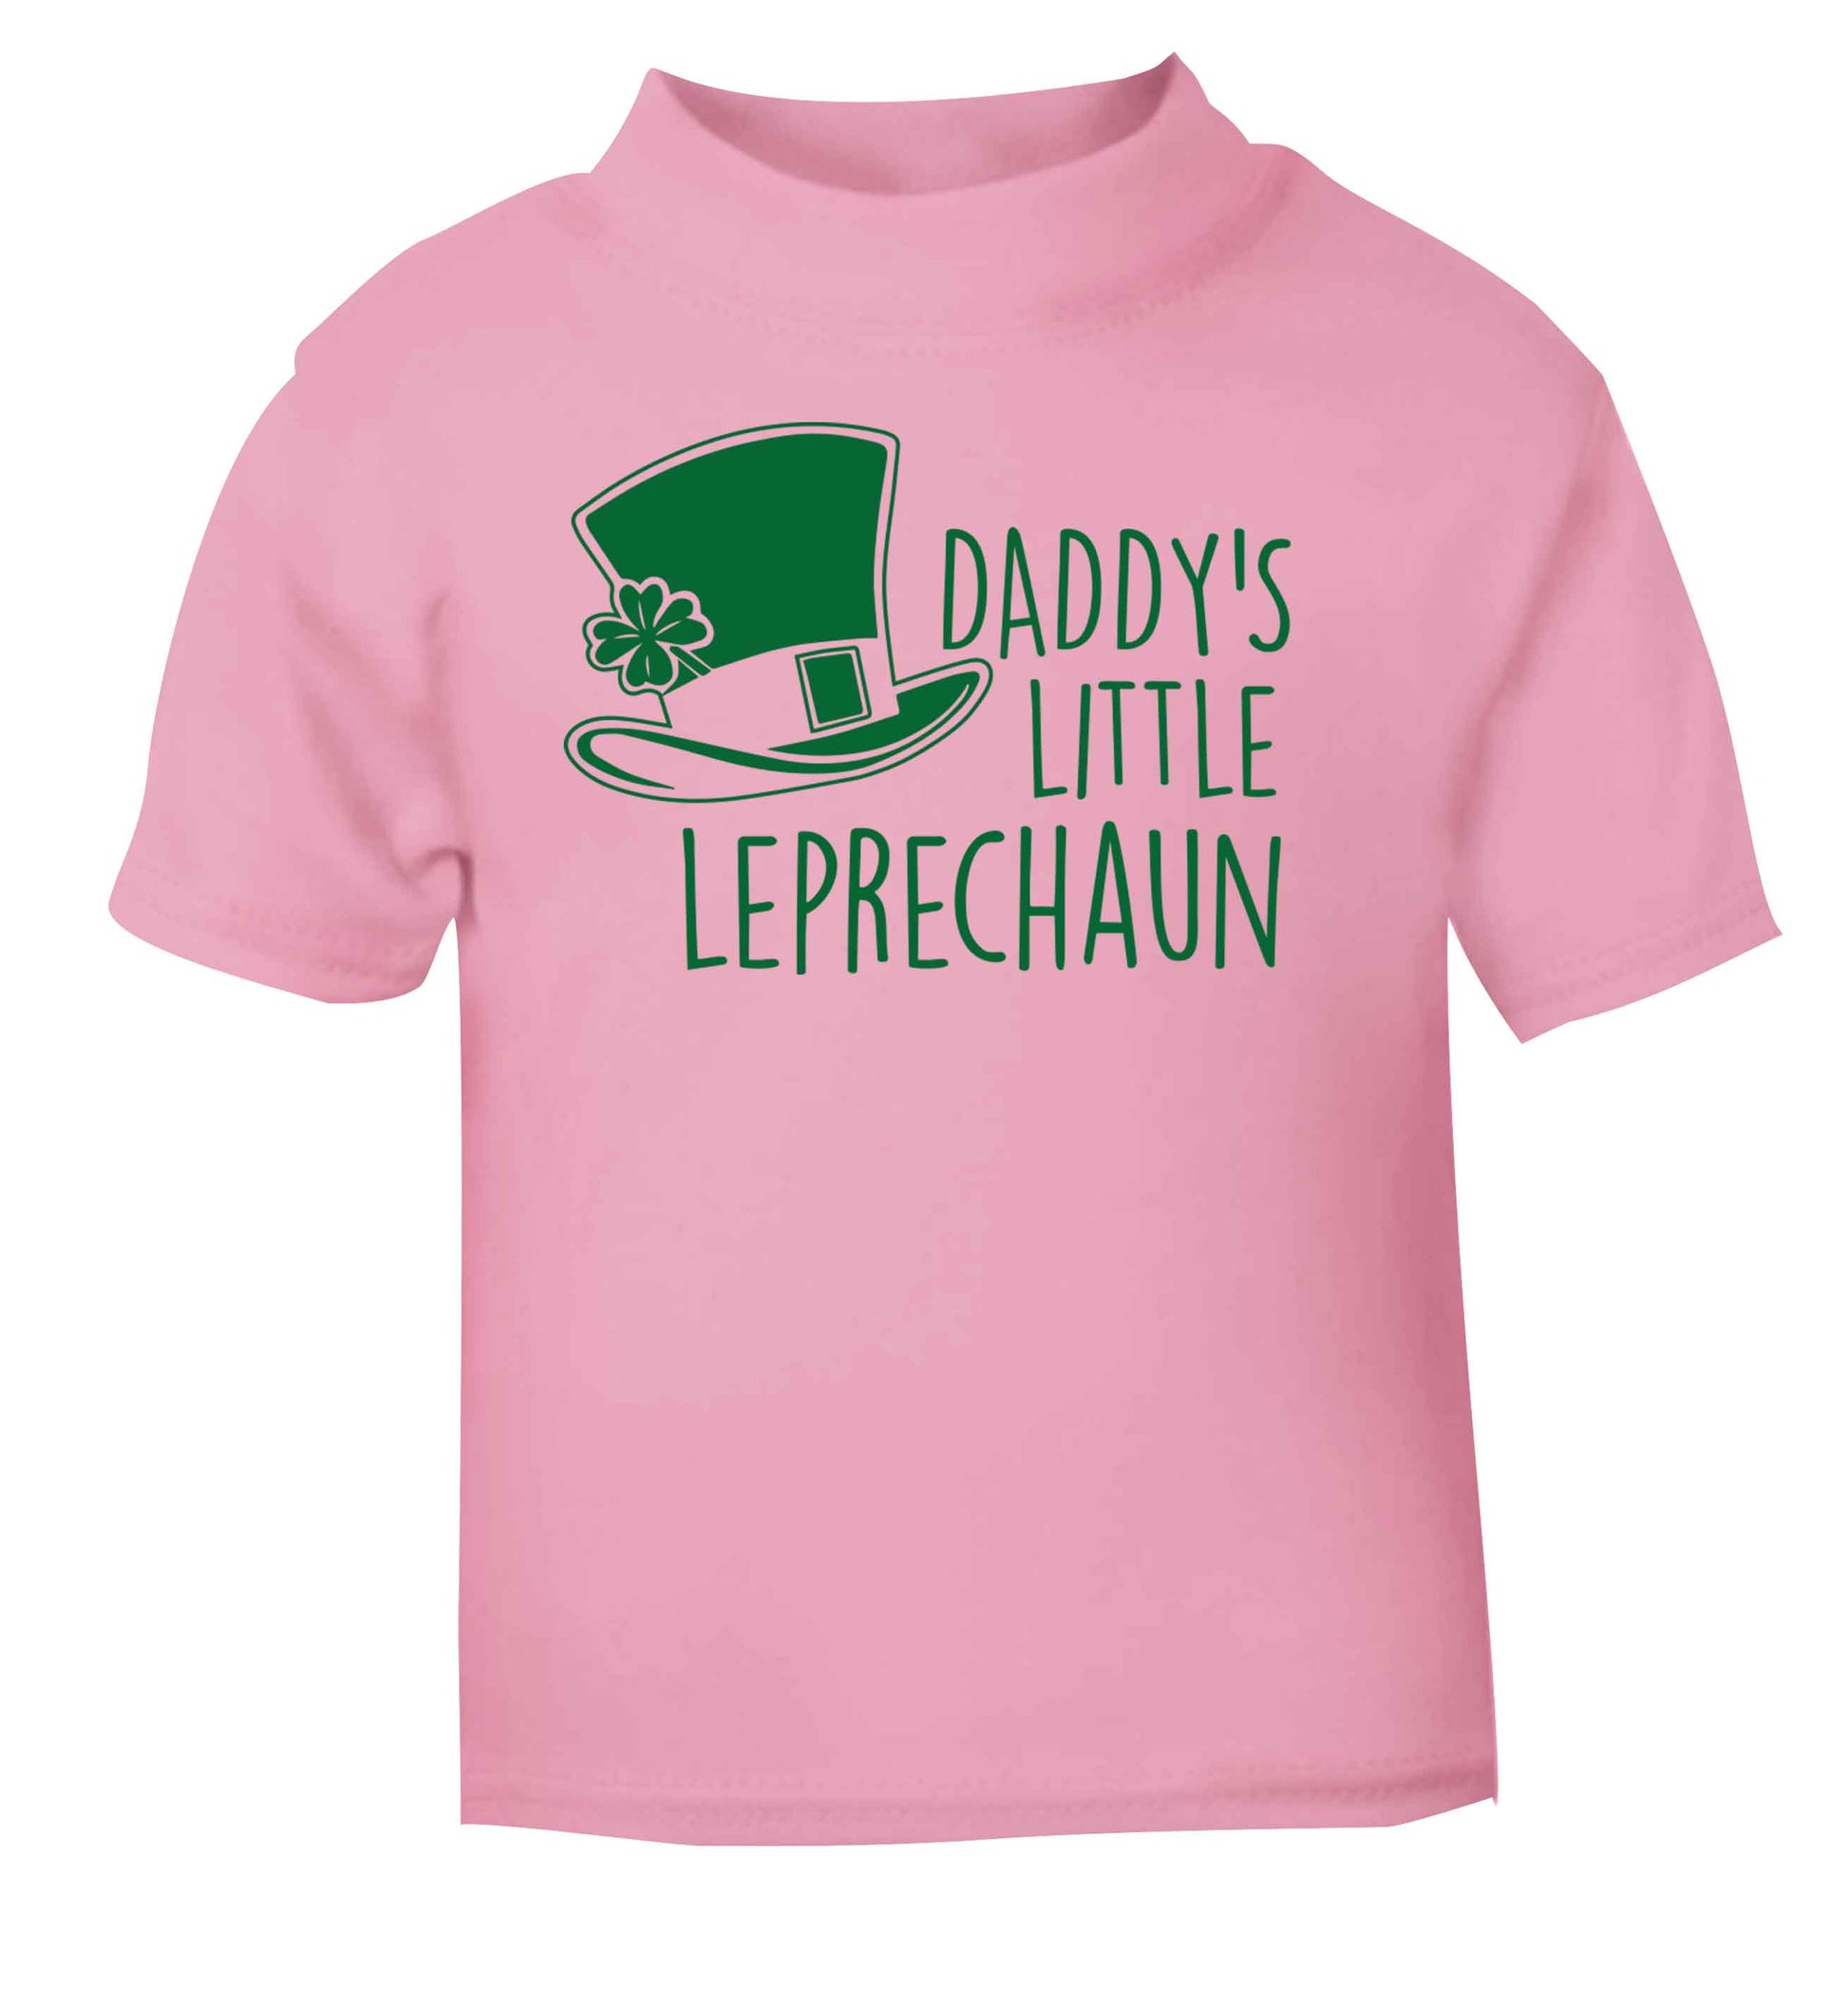 Daddy's little leprechaun light pink baby toddler Tshirt 2 Years